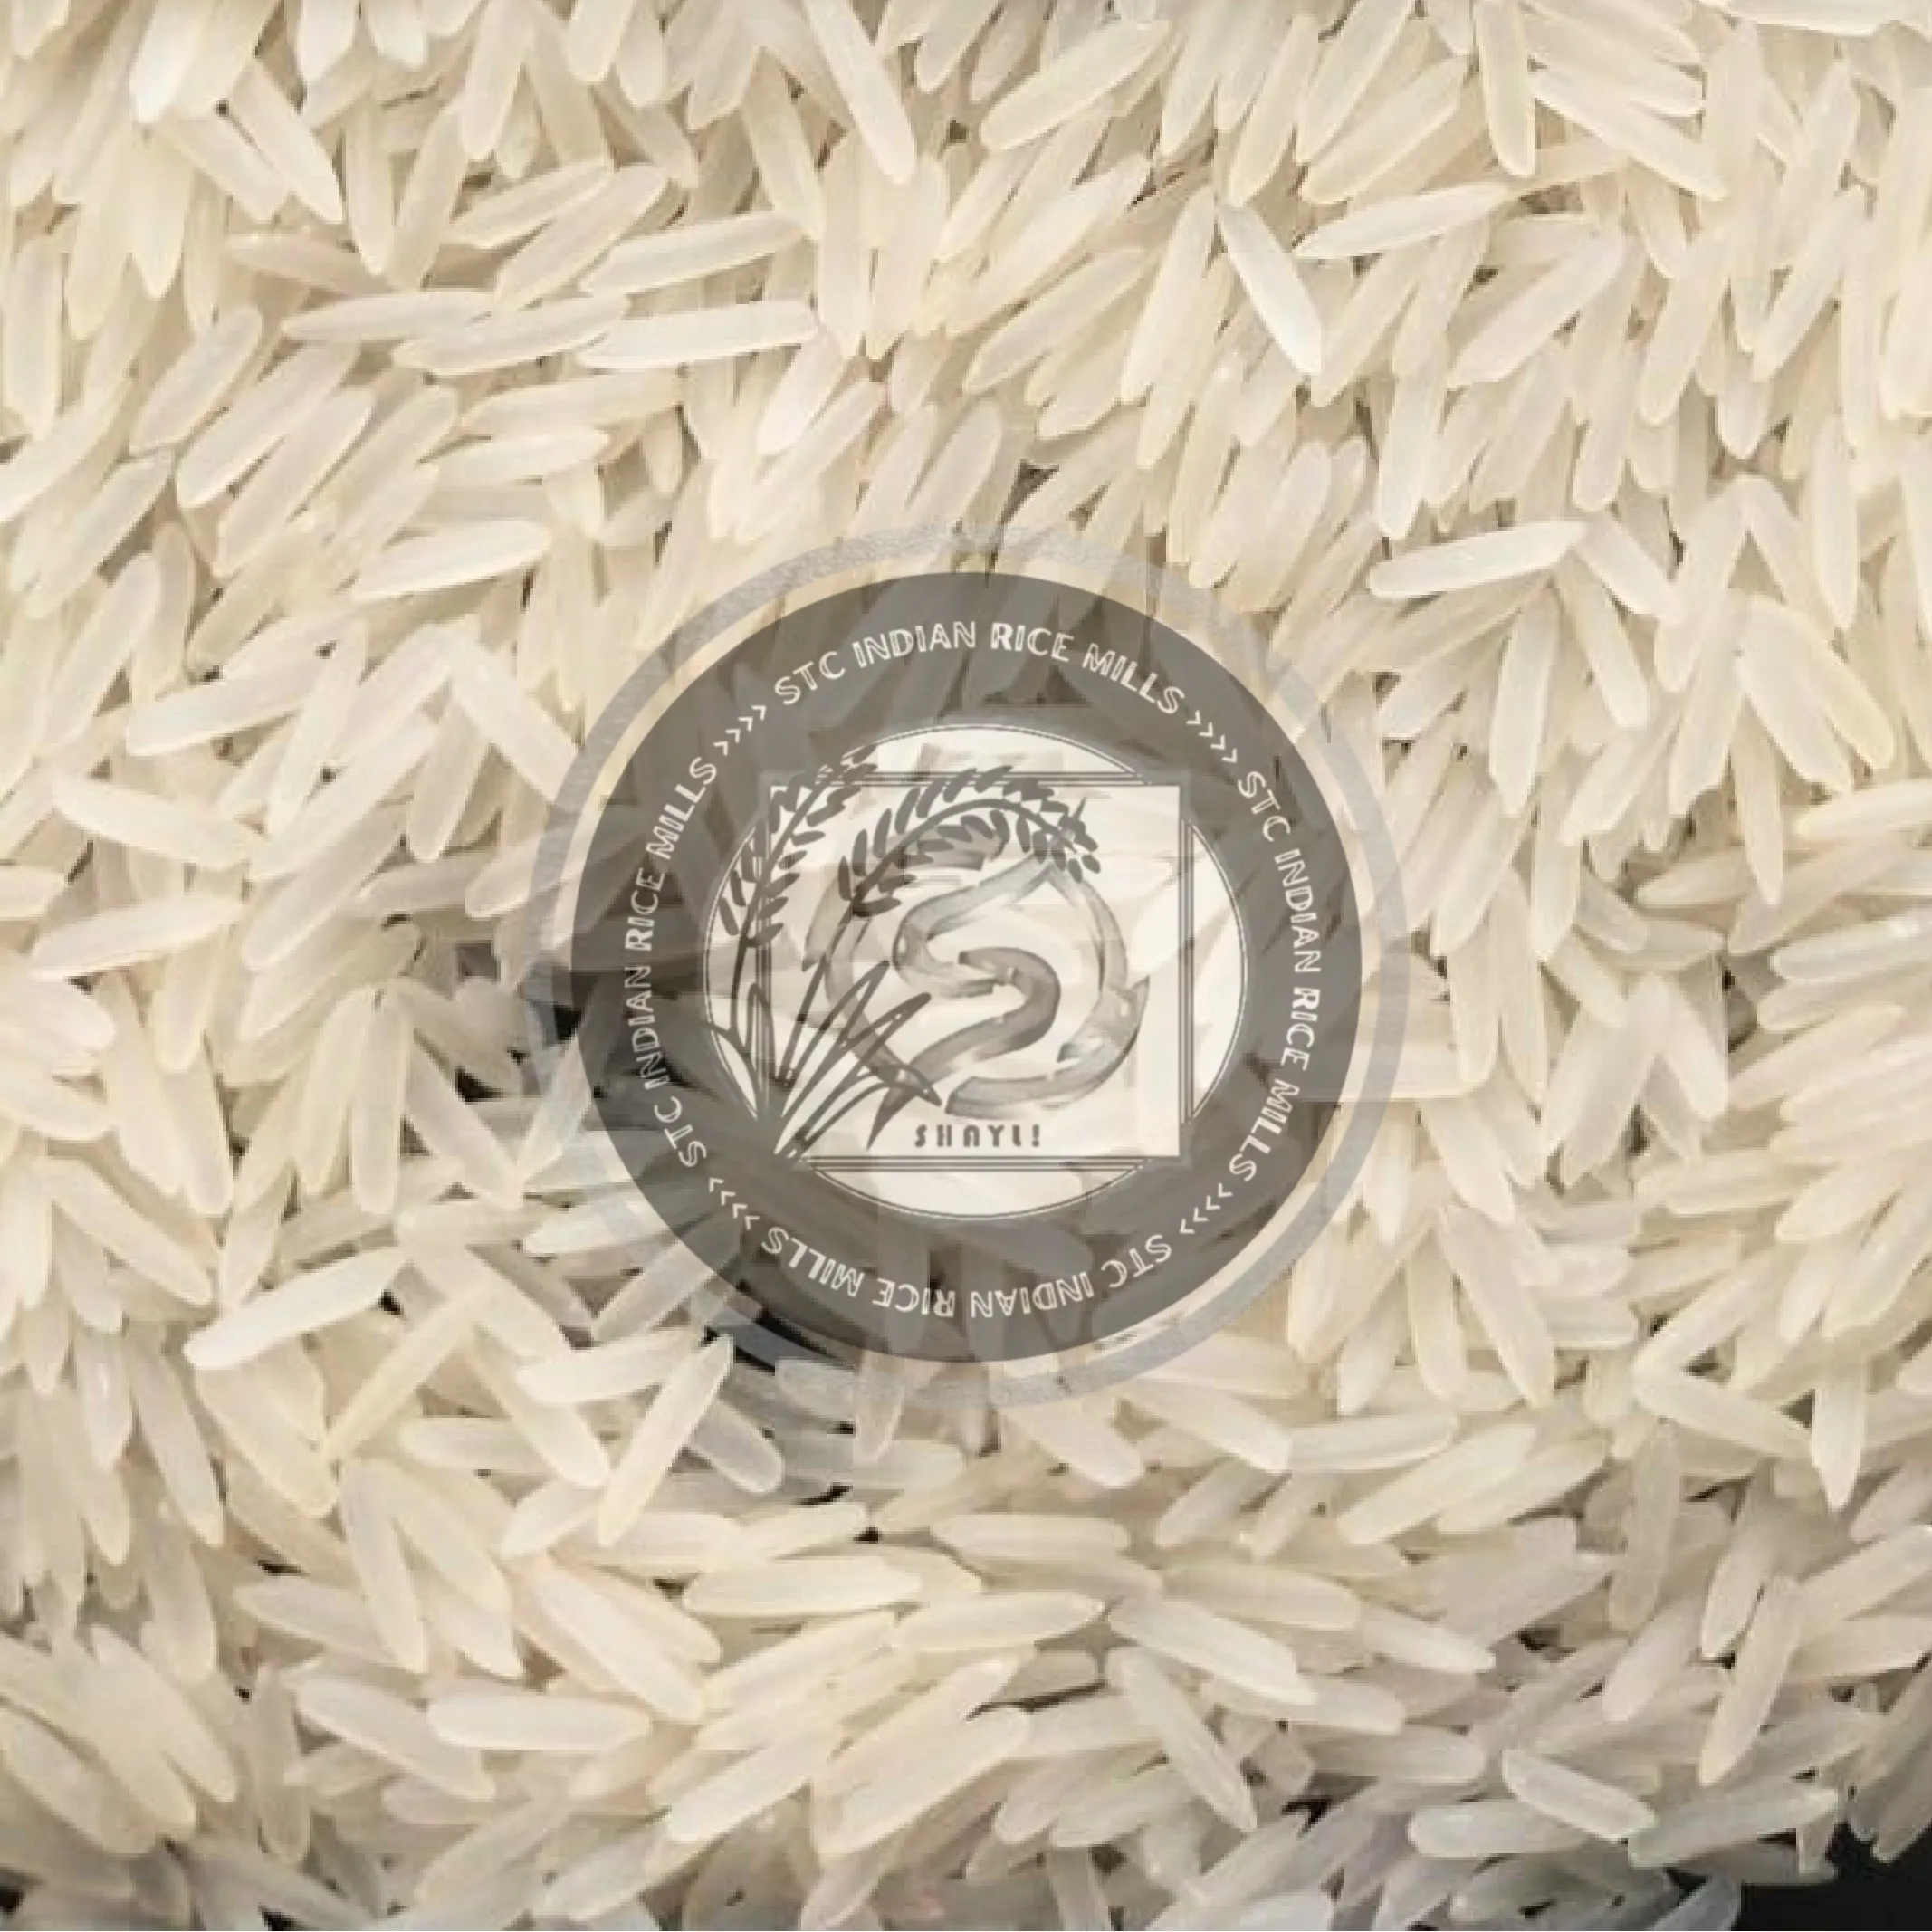 1121 White/Creamy Sella Basmati Rice